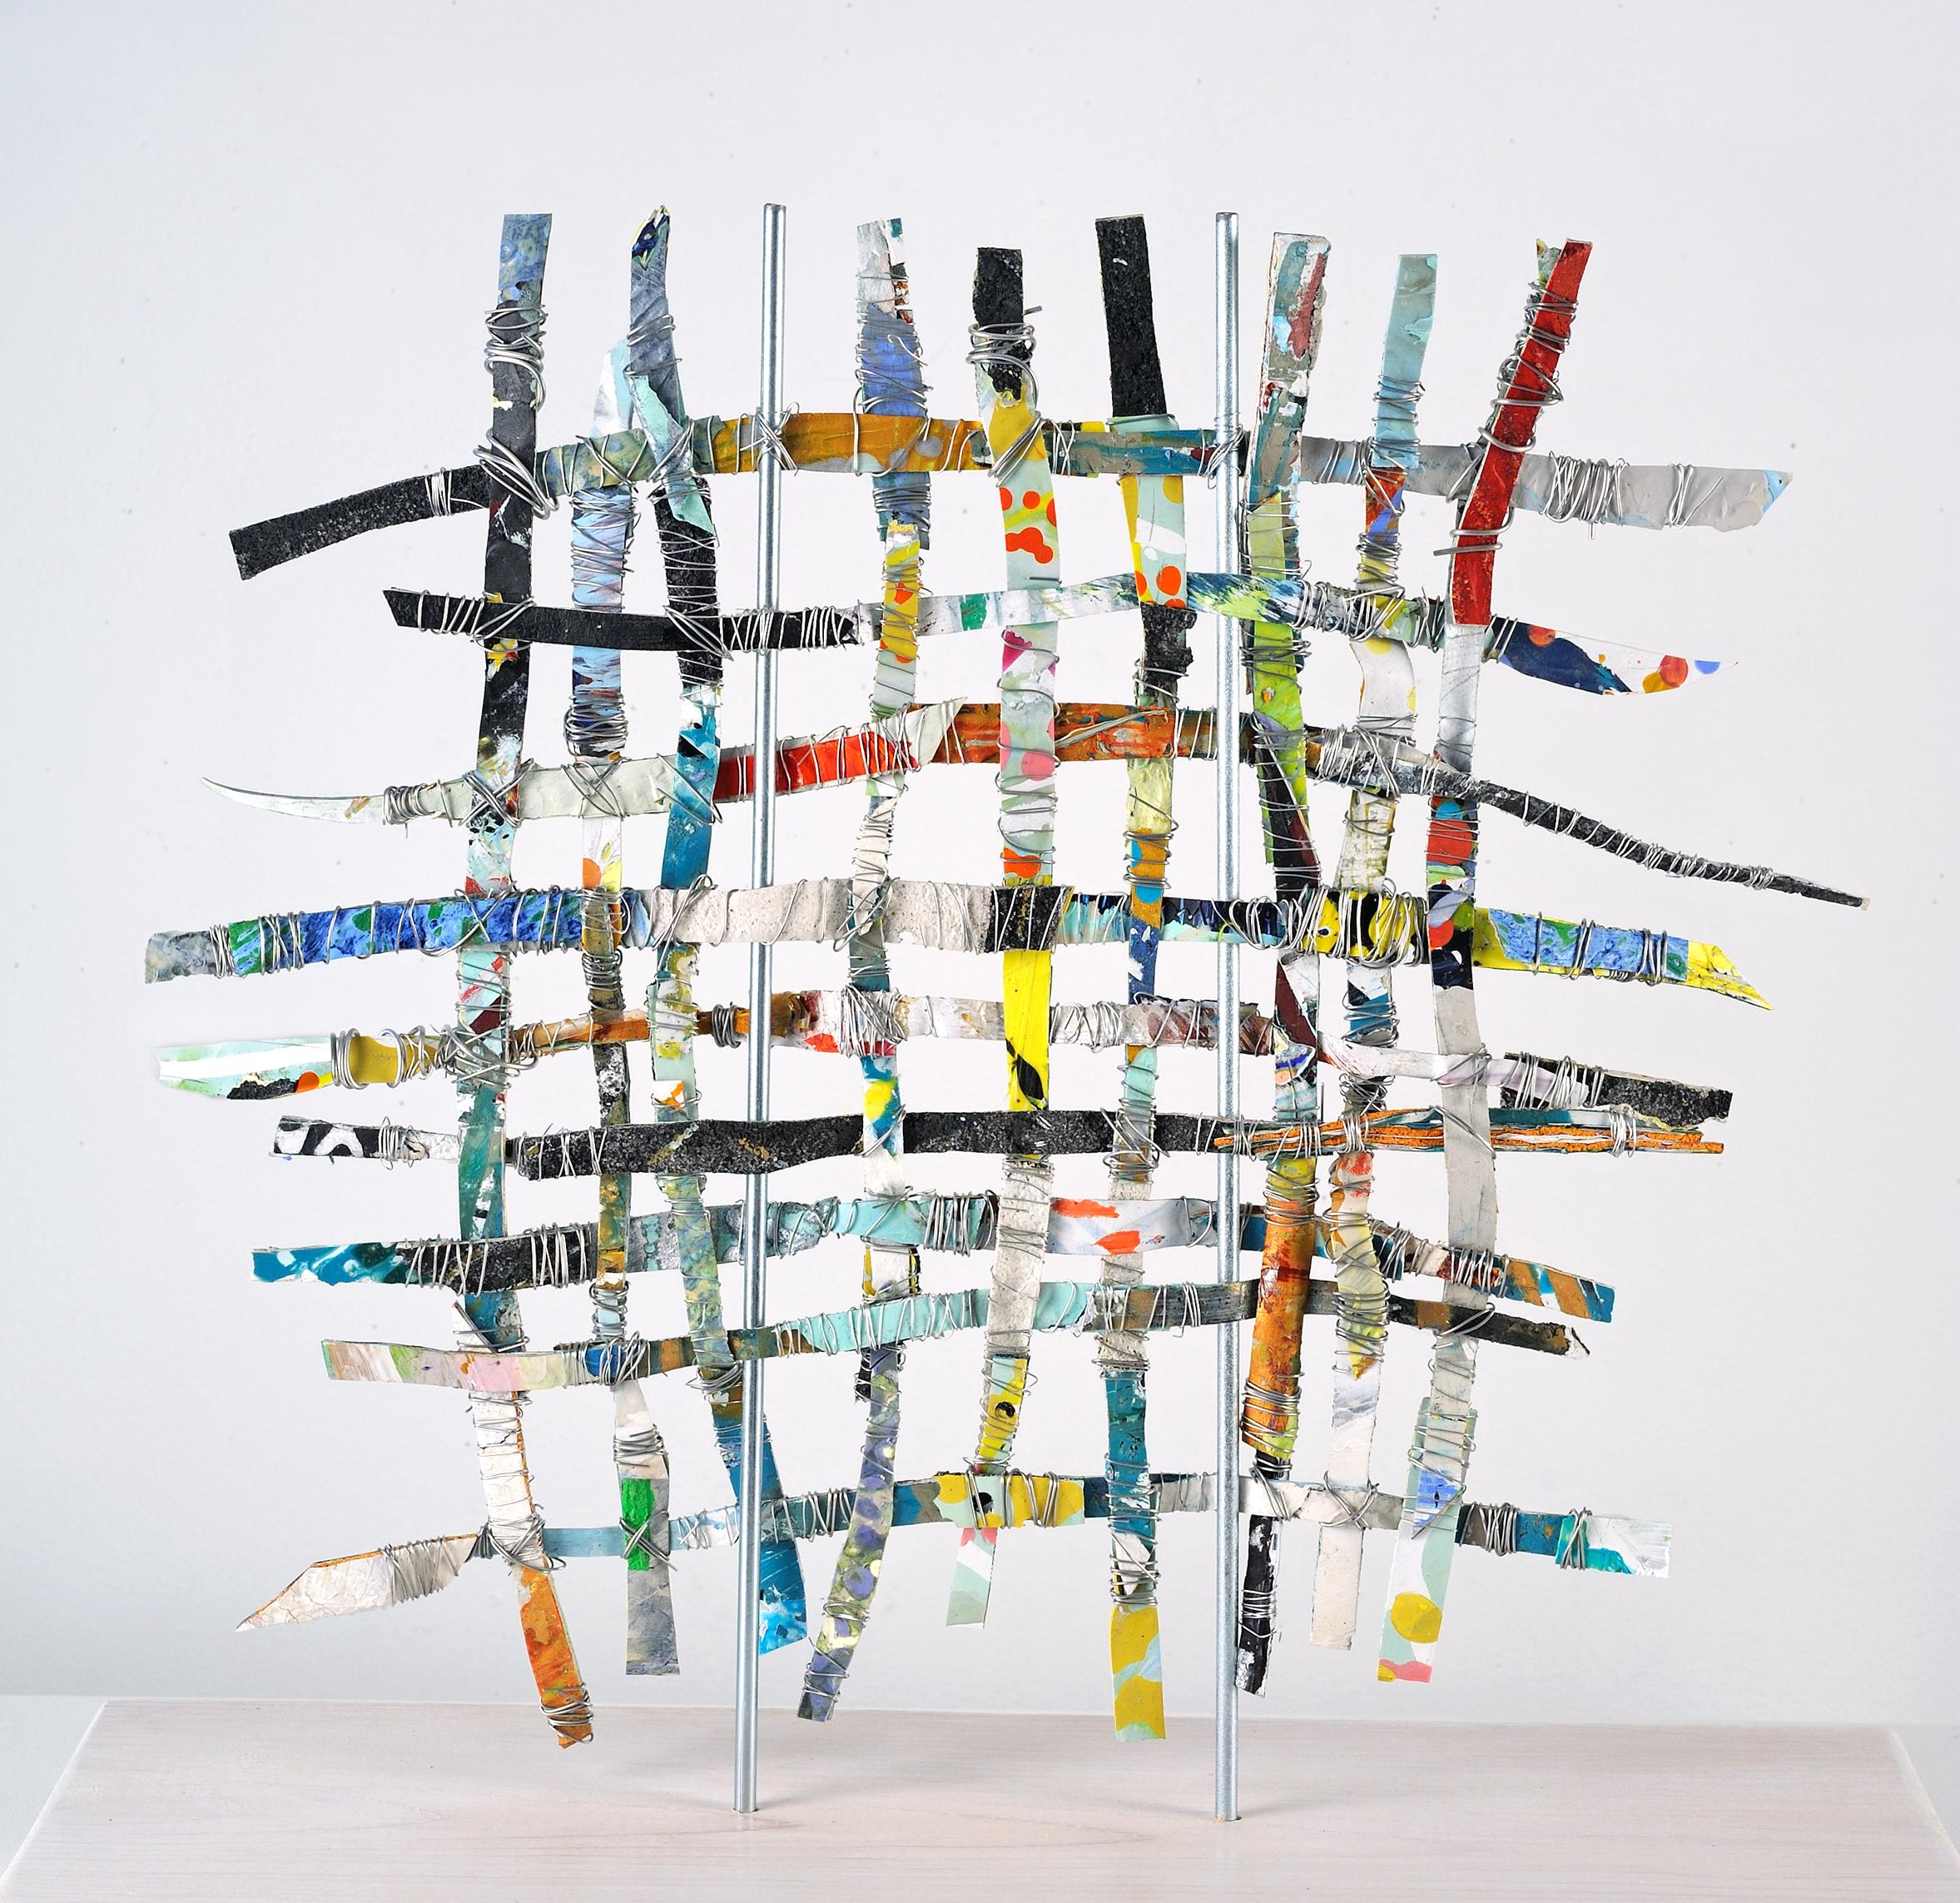 Francie Hester Abstract Sculpture - Renewal #1, mixed media aluminum sculpture, multicolored grid, 16 x 16 inches